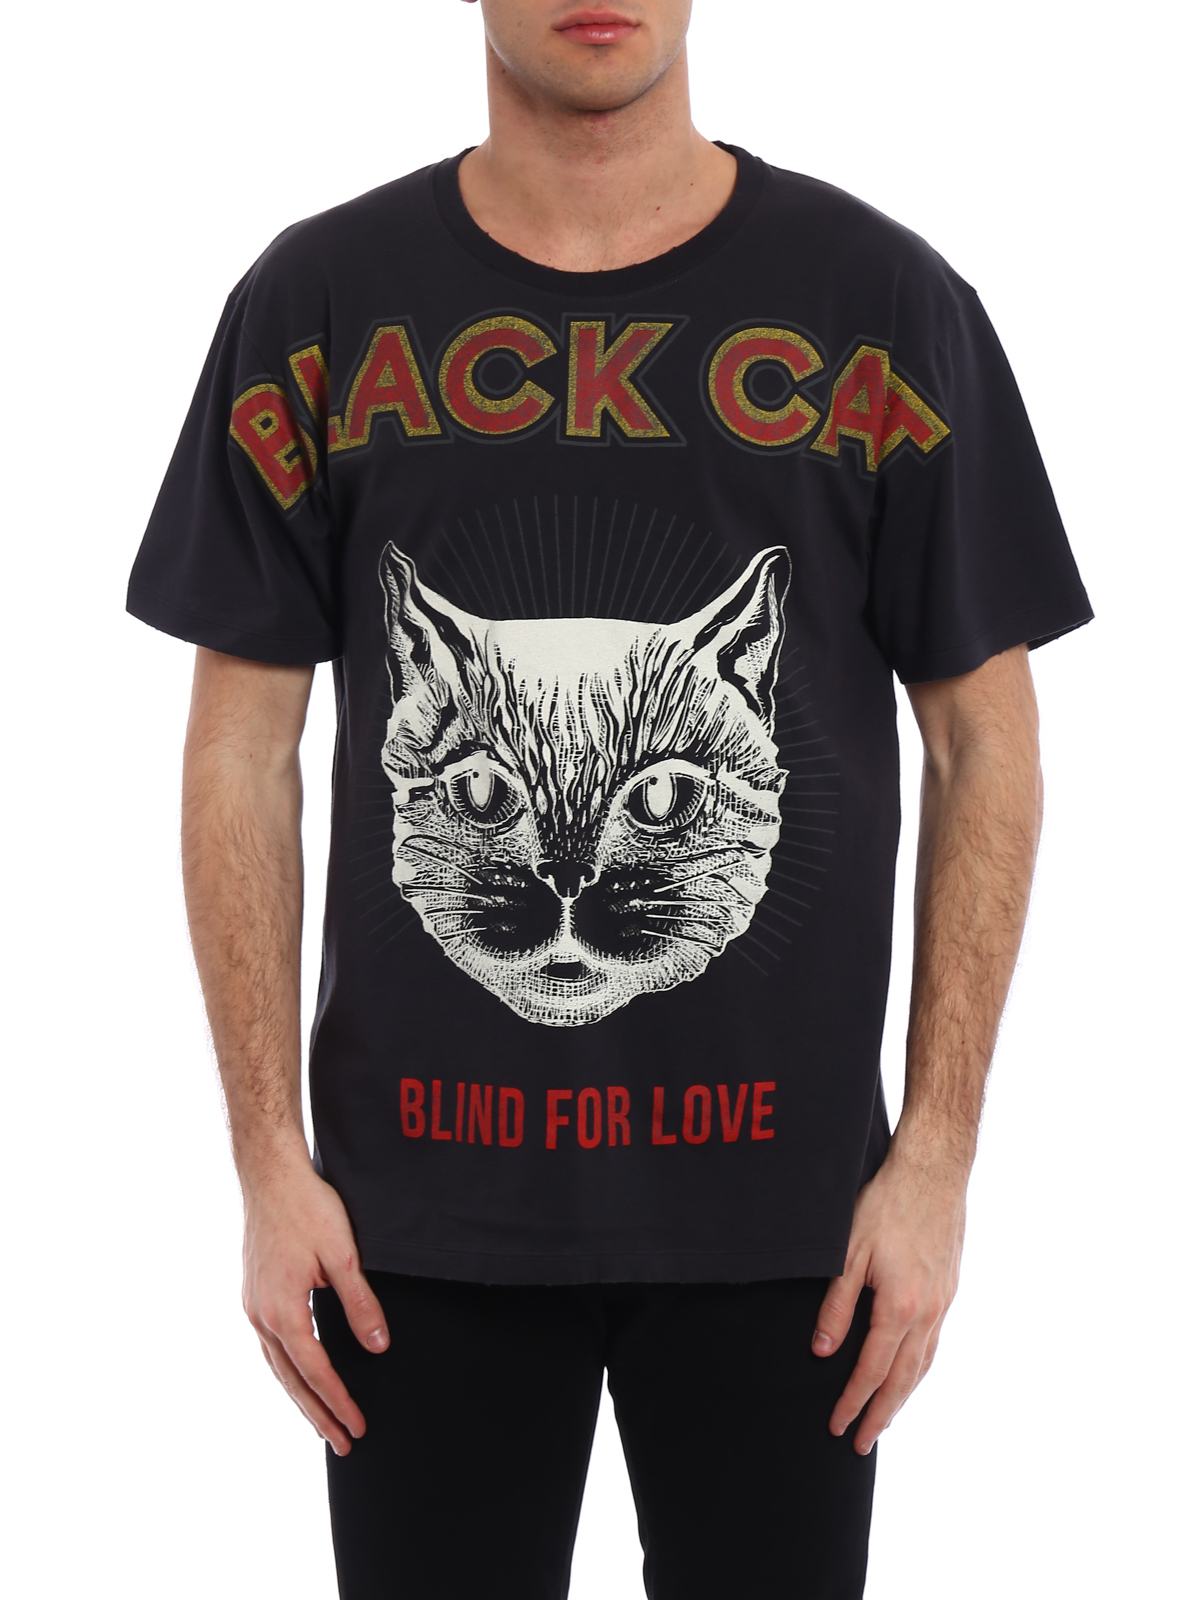 gucci t shirt black cat